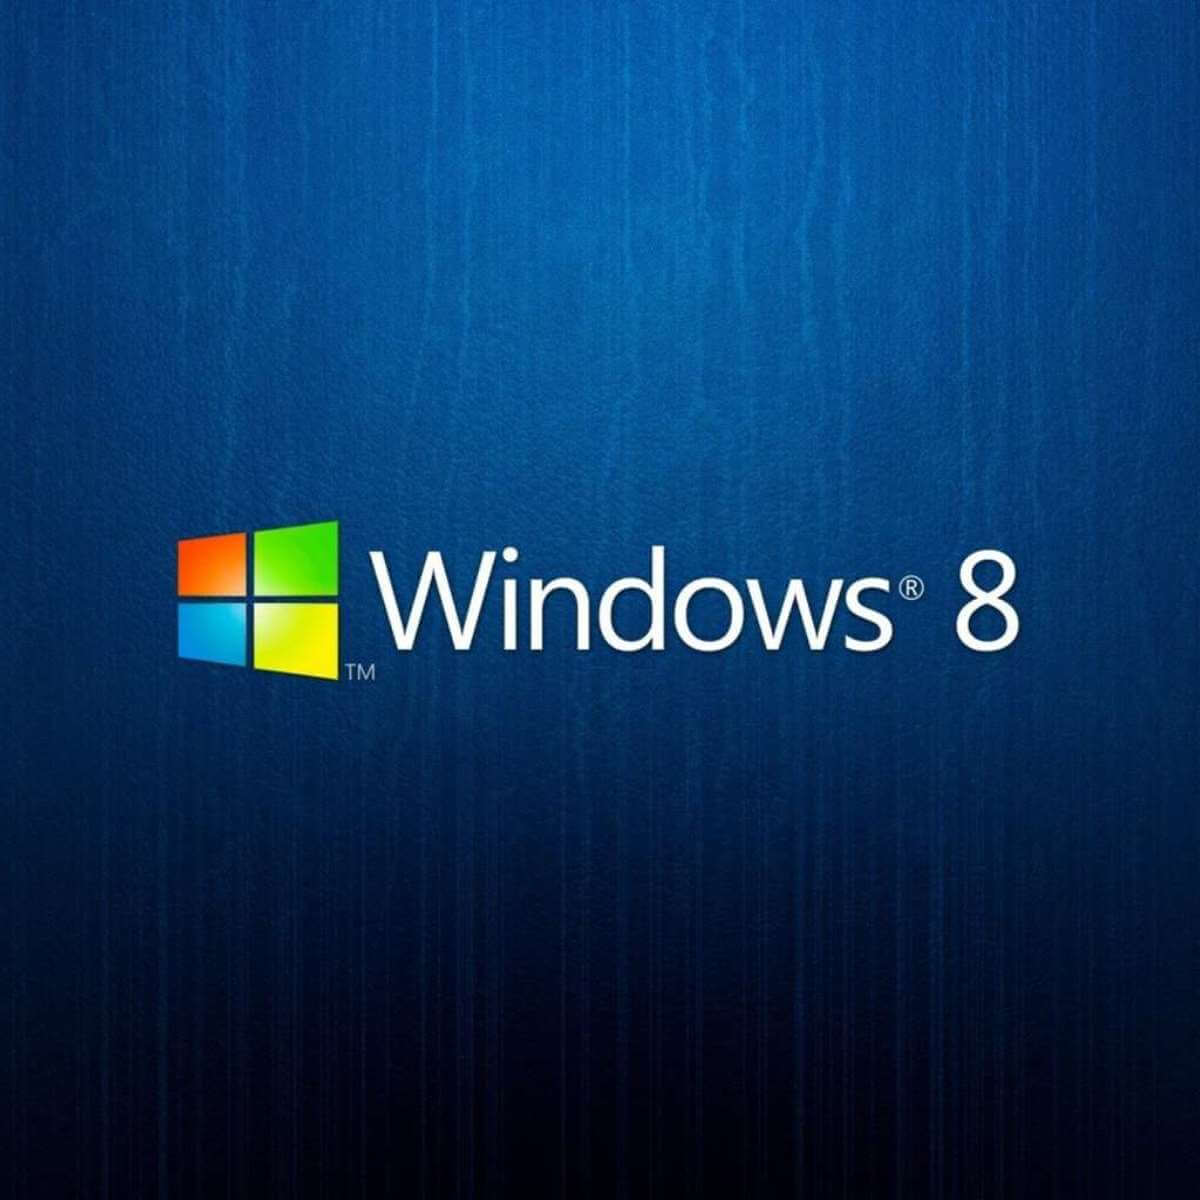 windows 8 features updates